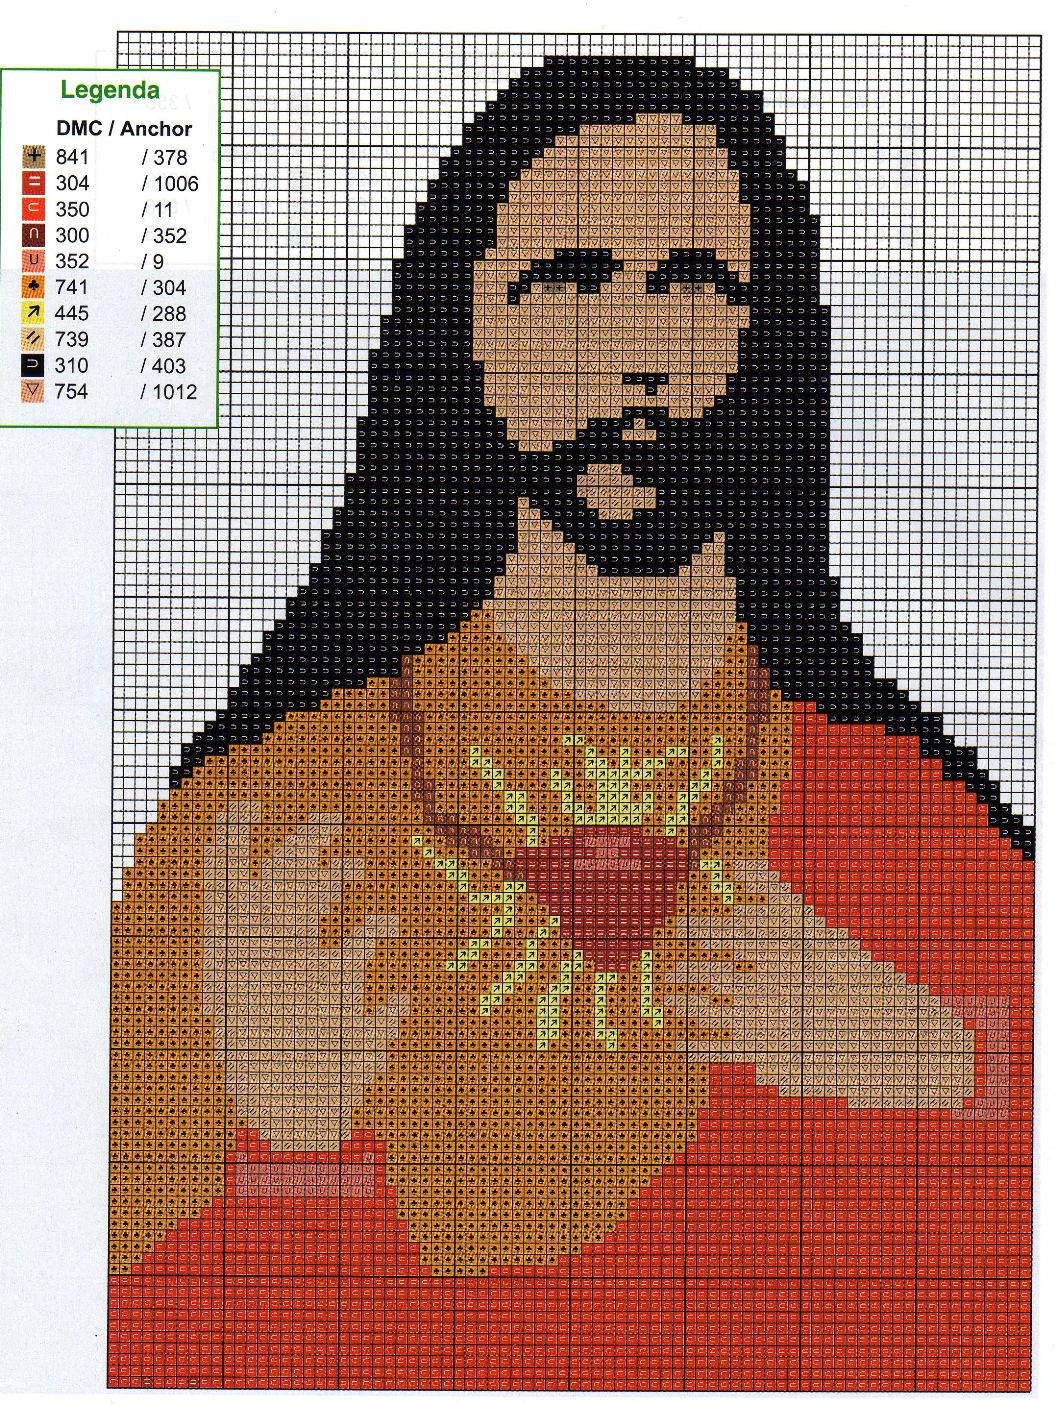 Jesus with few colors